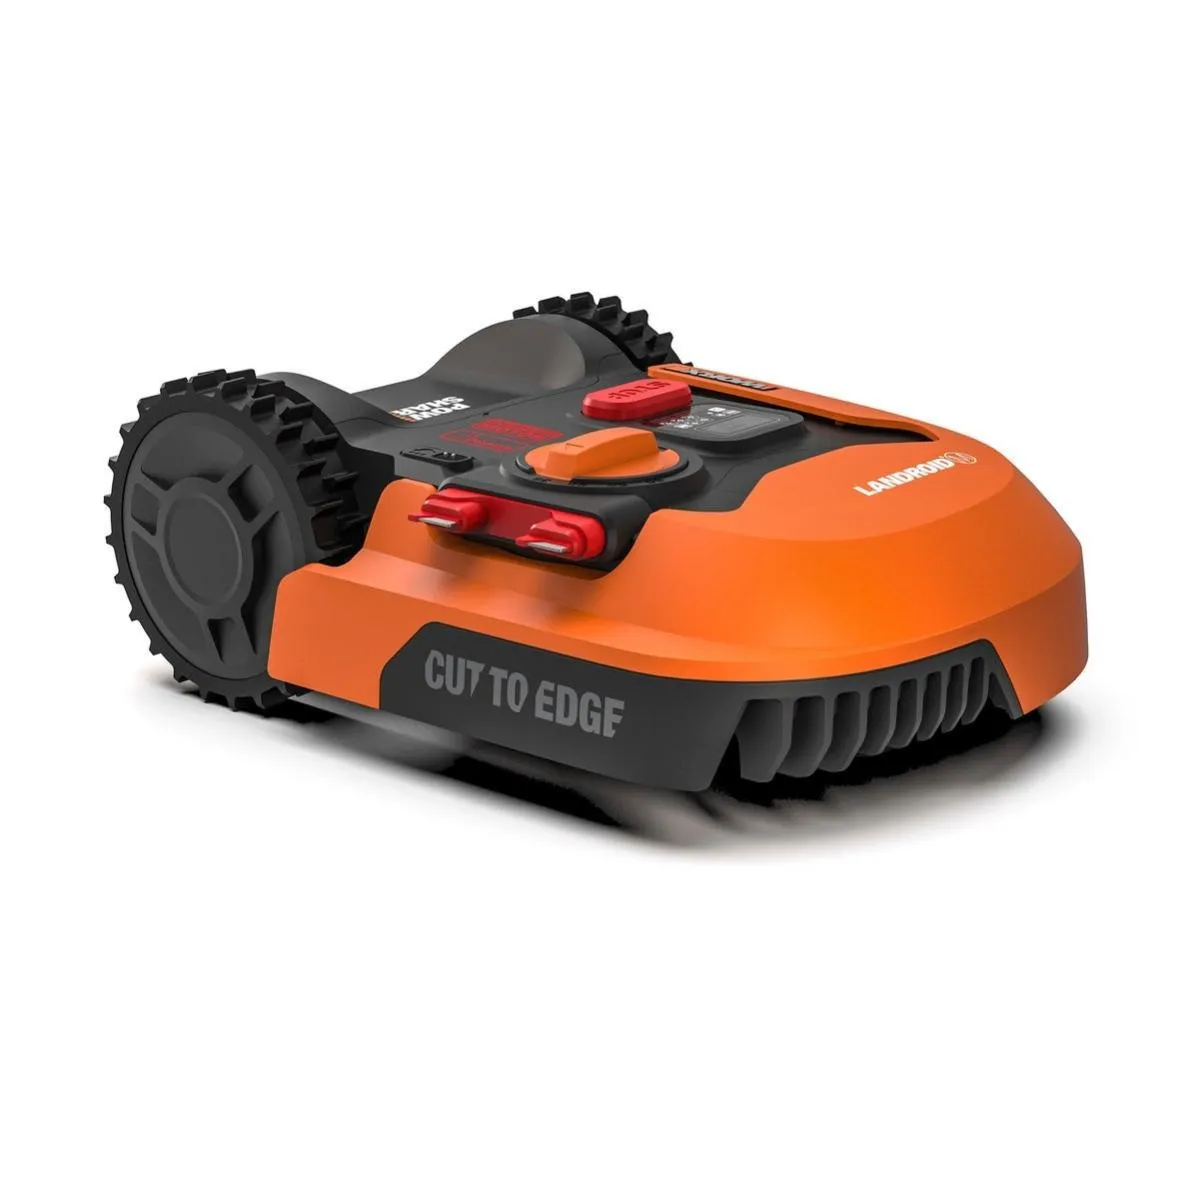 WR142 700 M2 Landroid Robotic Lawnmower